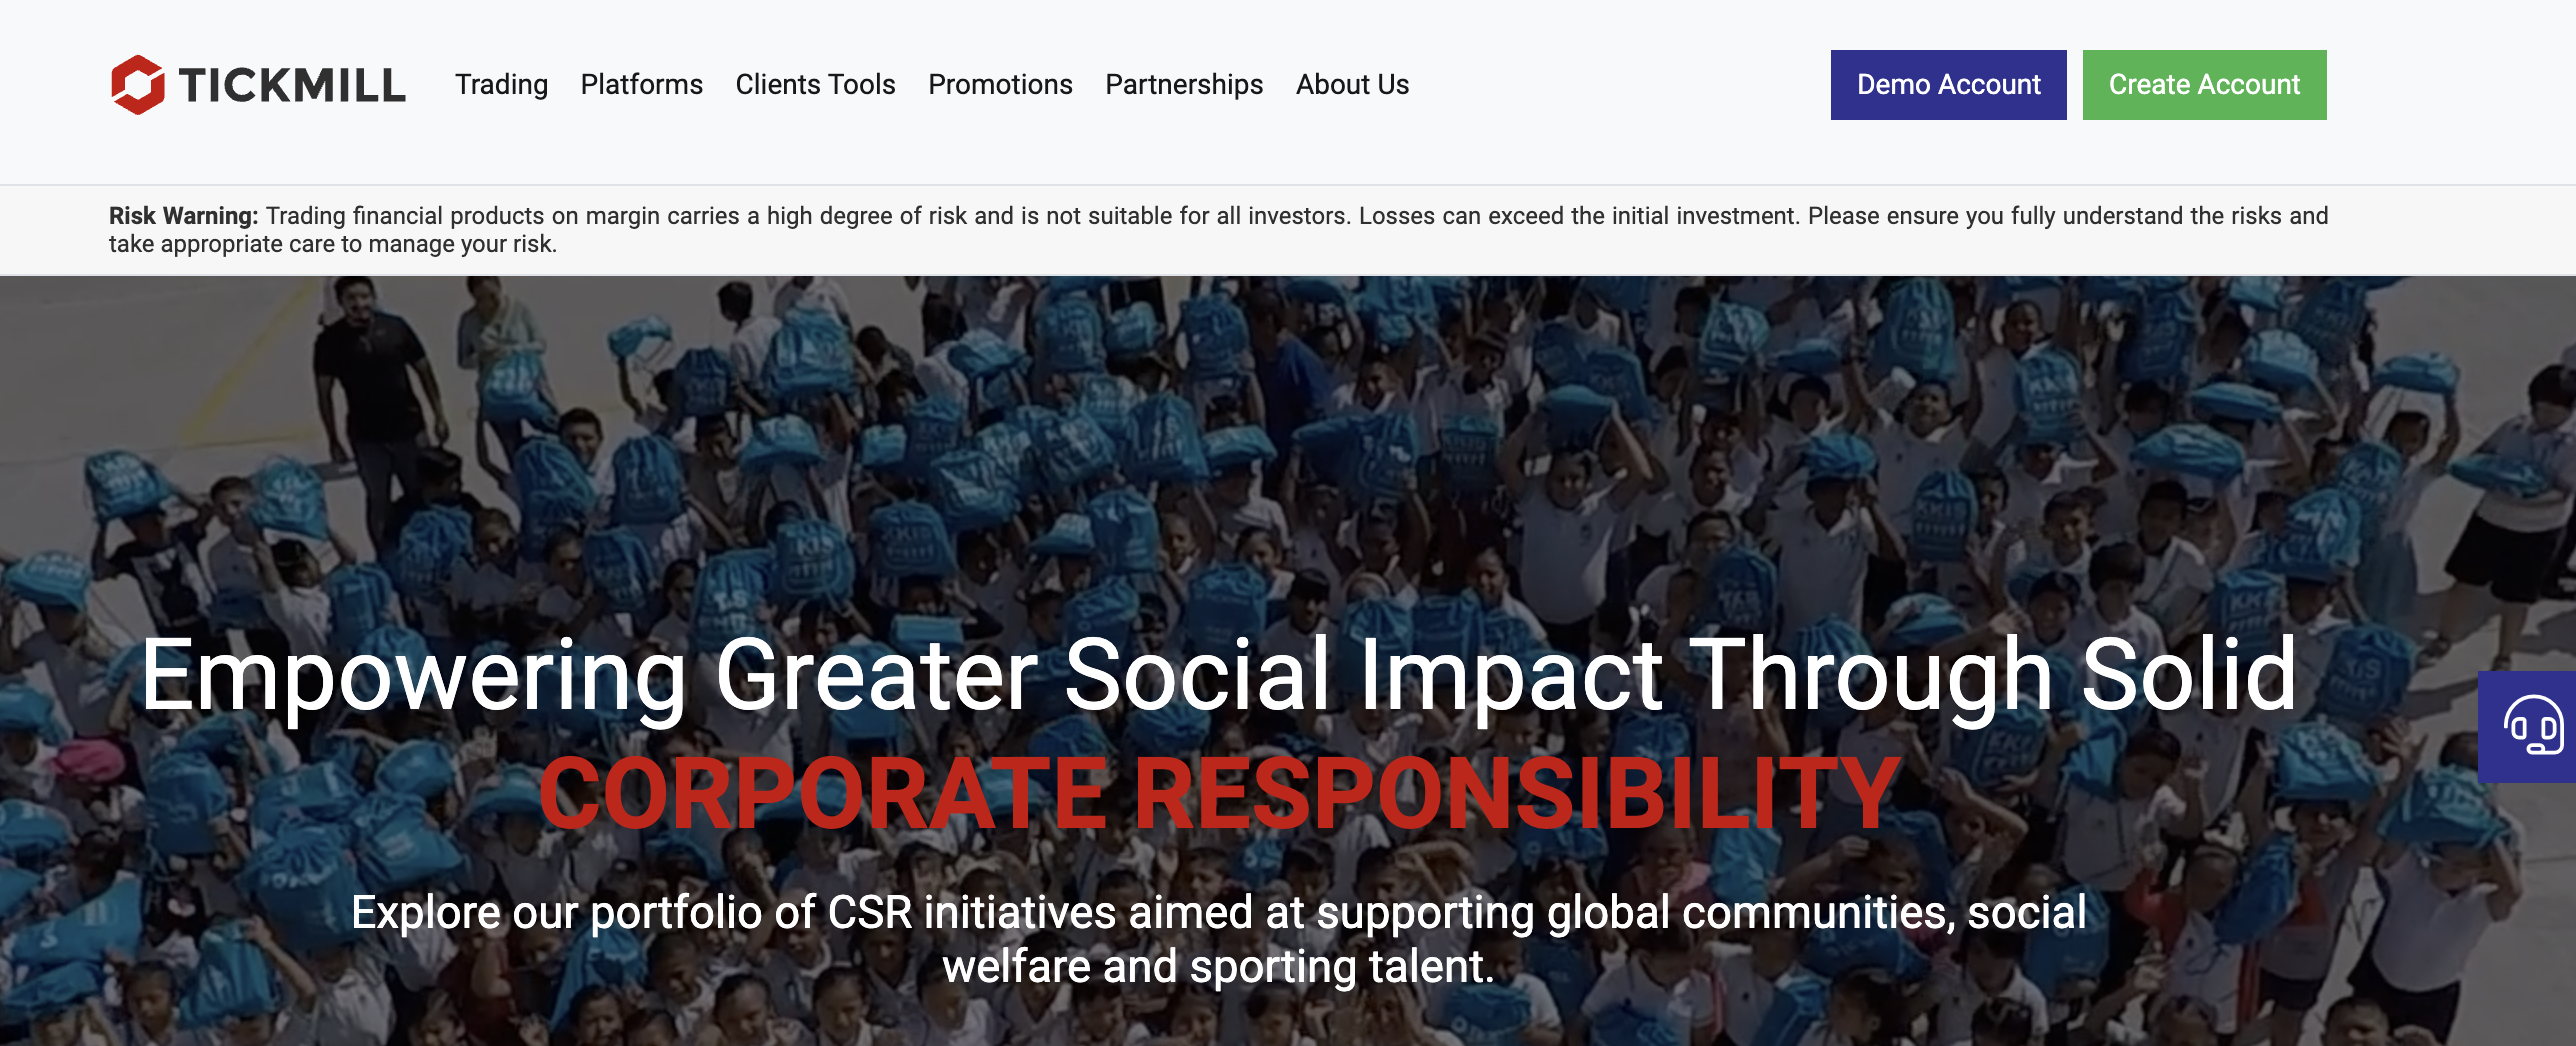 Tickmill Corporate Social Responsibility